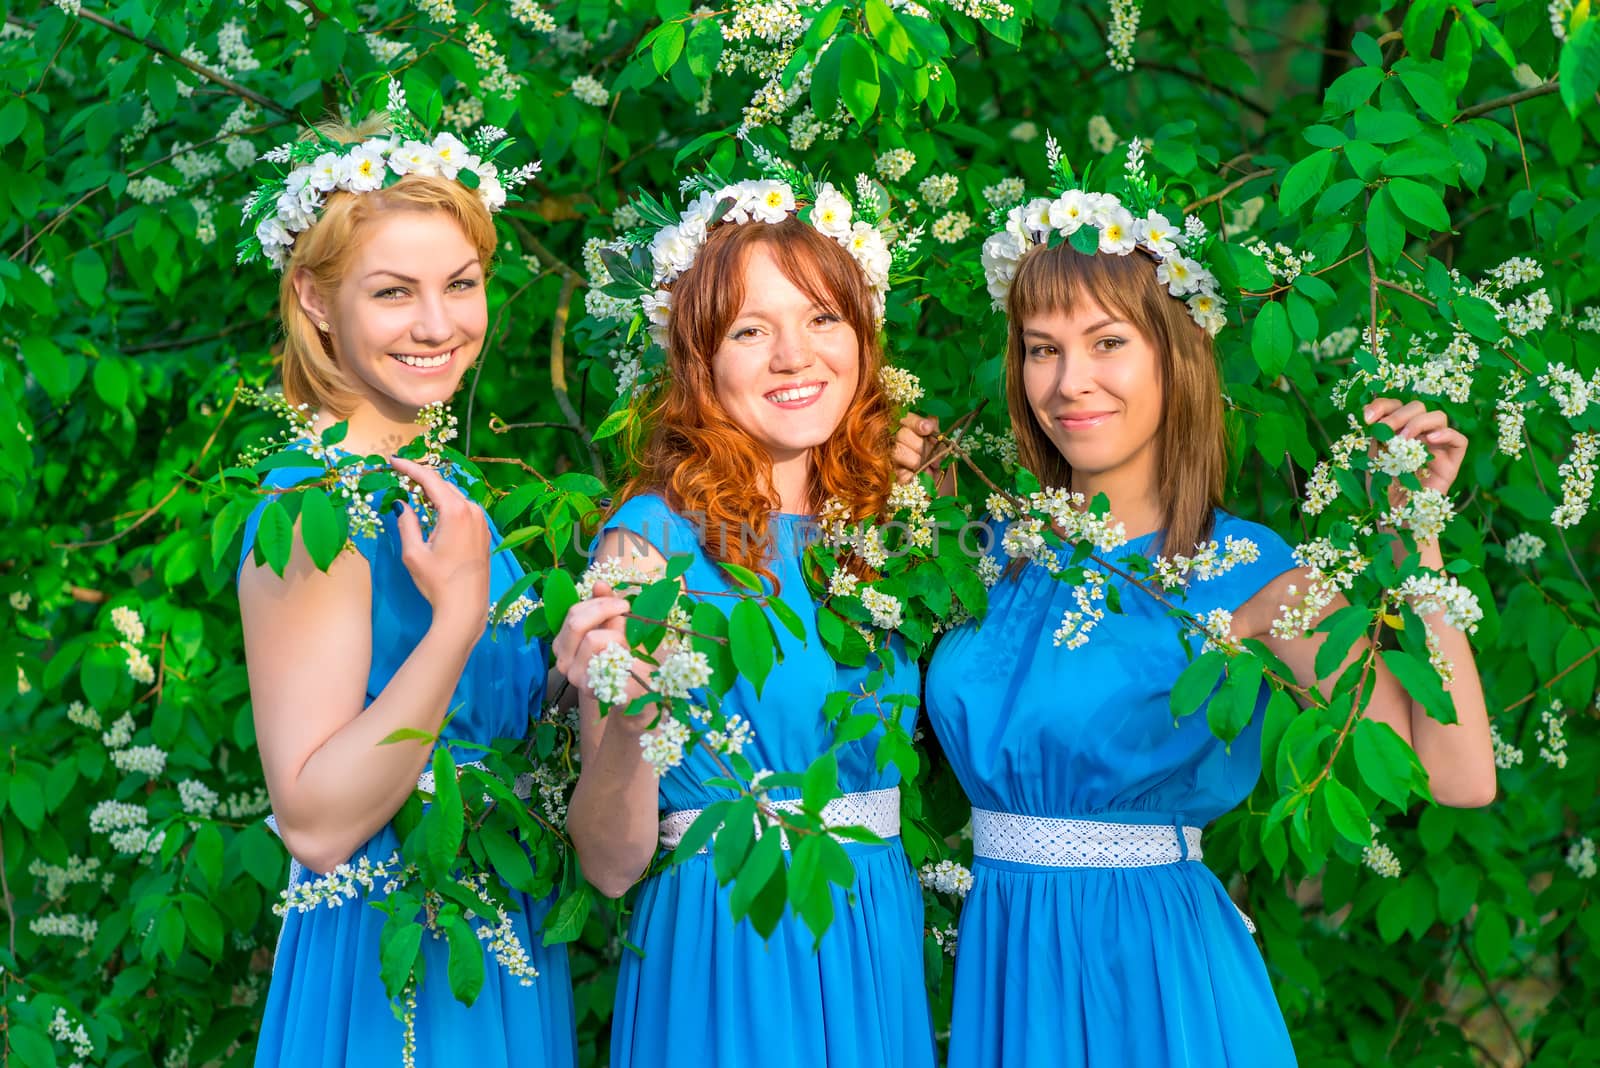 Three happy girls in identical dresses posing in the garden in spring